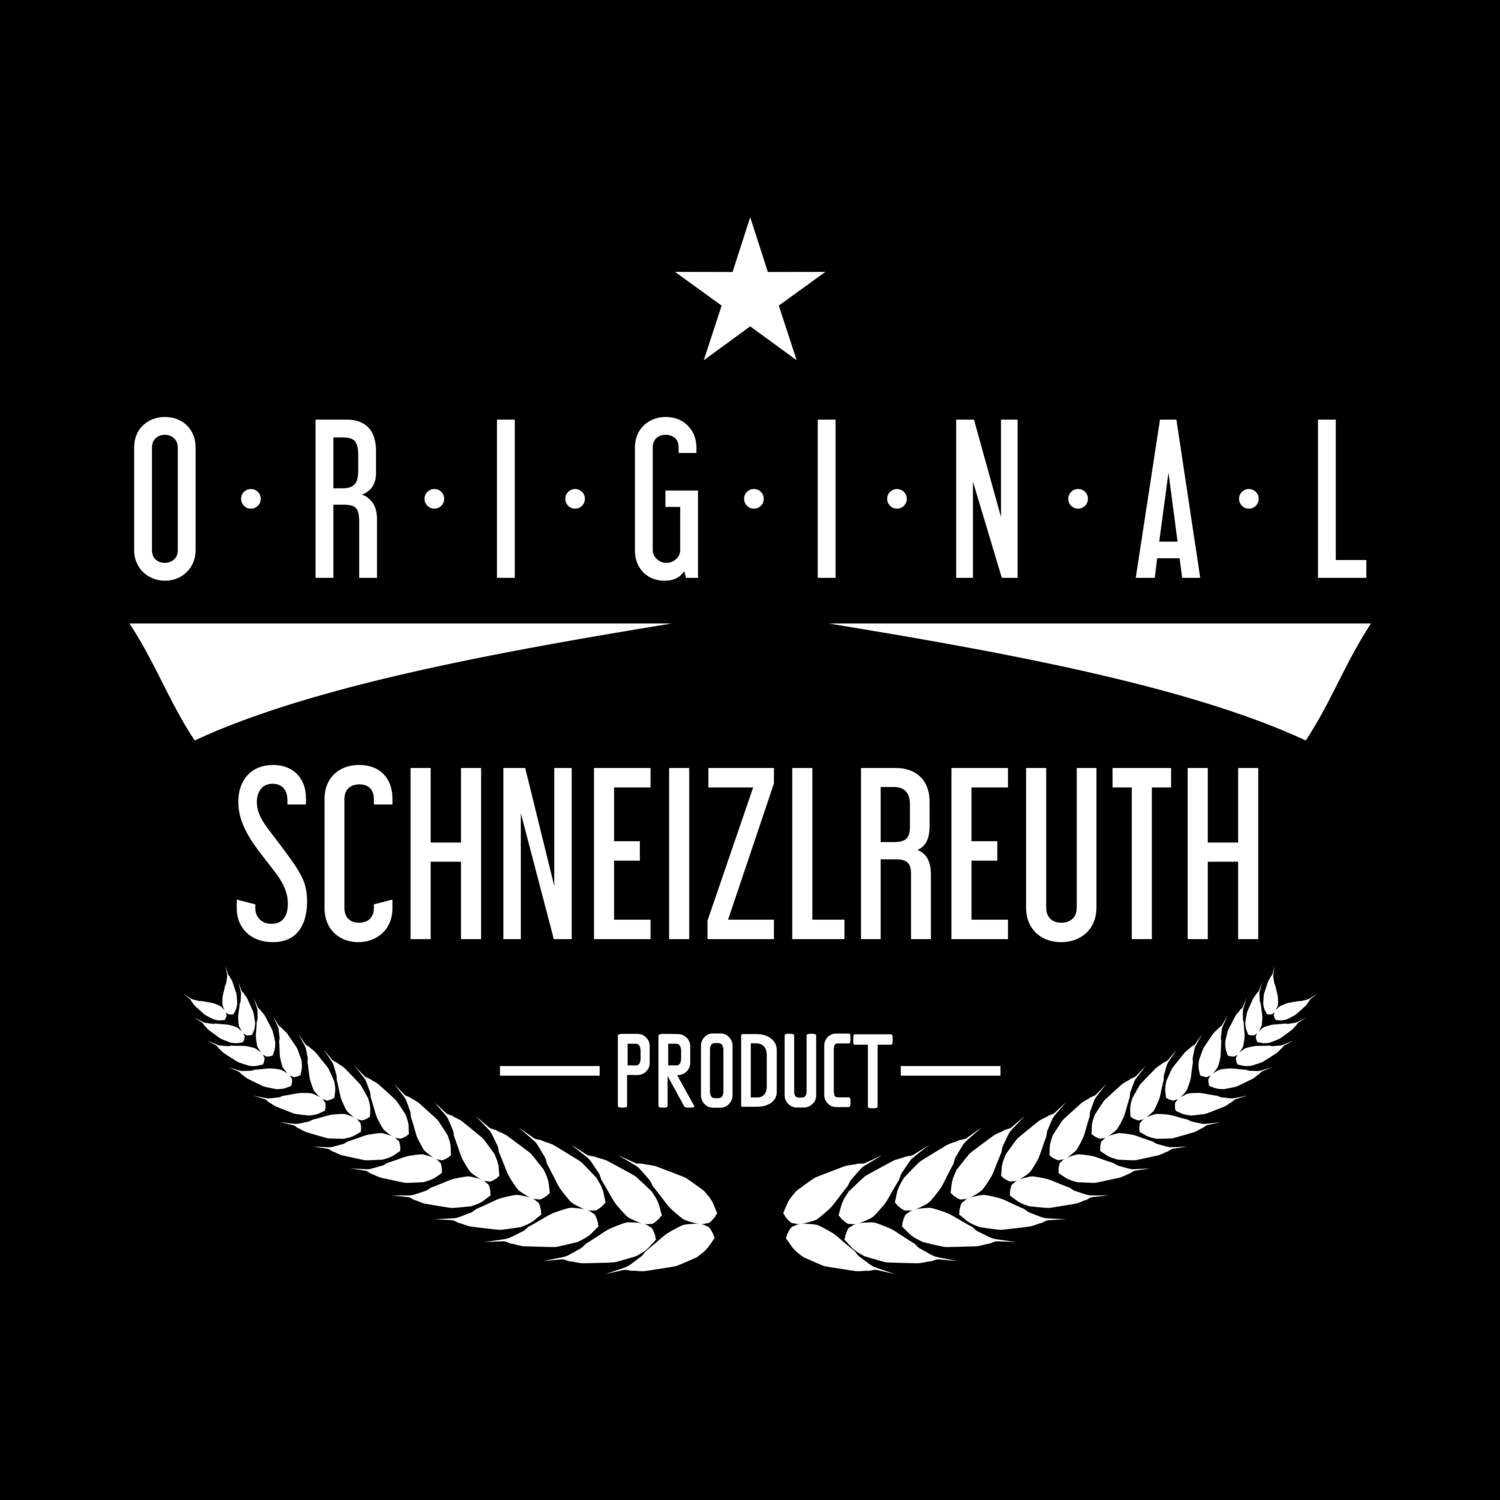 Schneizlreuth T-Shirt »Original Product«